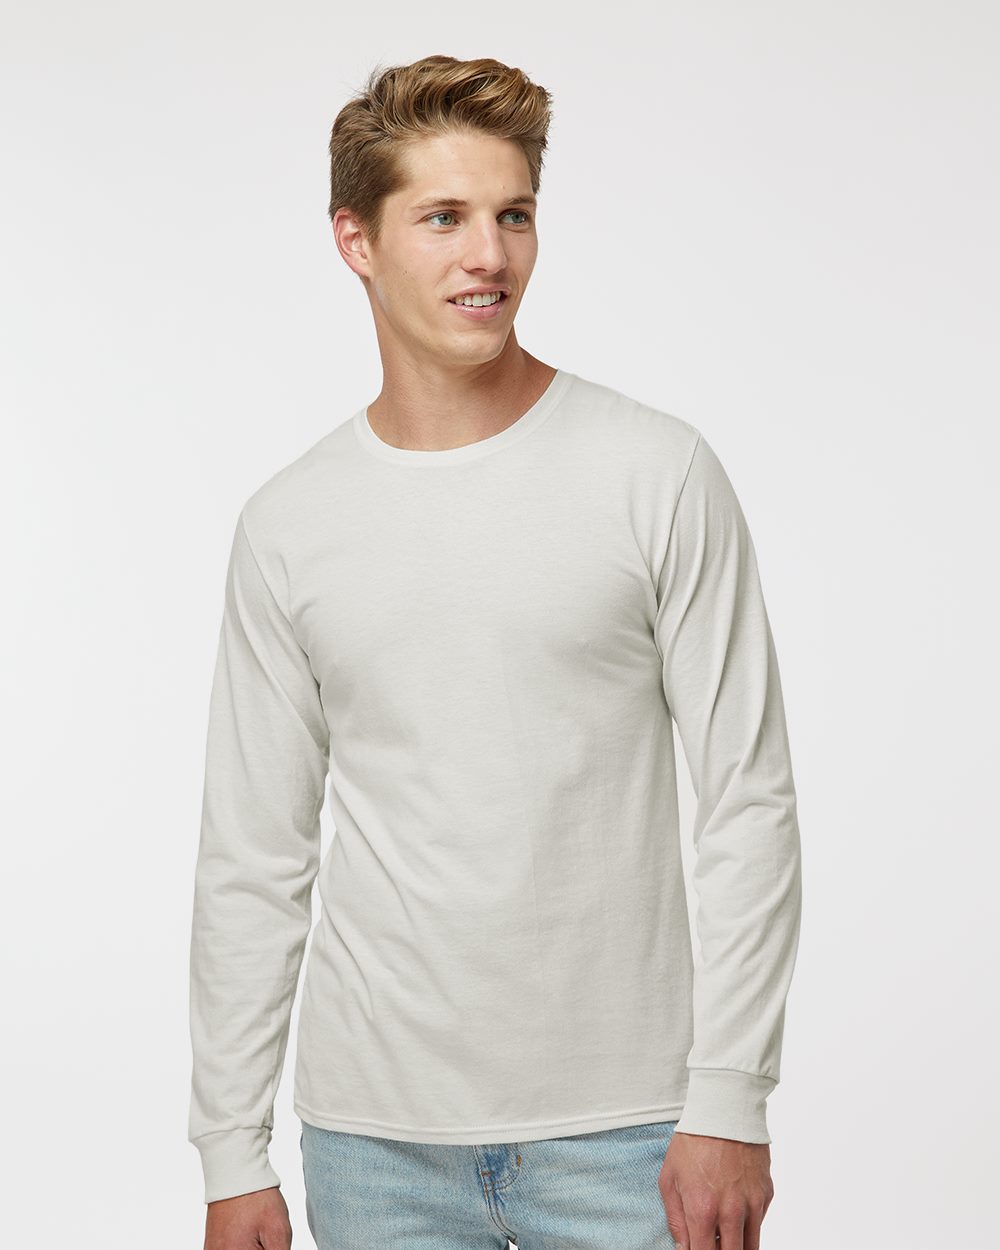 CVC Performance Long Sleeve T-Shirt - Russell Athletic 64LTTM | Shop Online